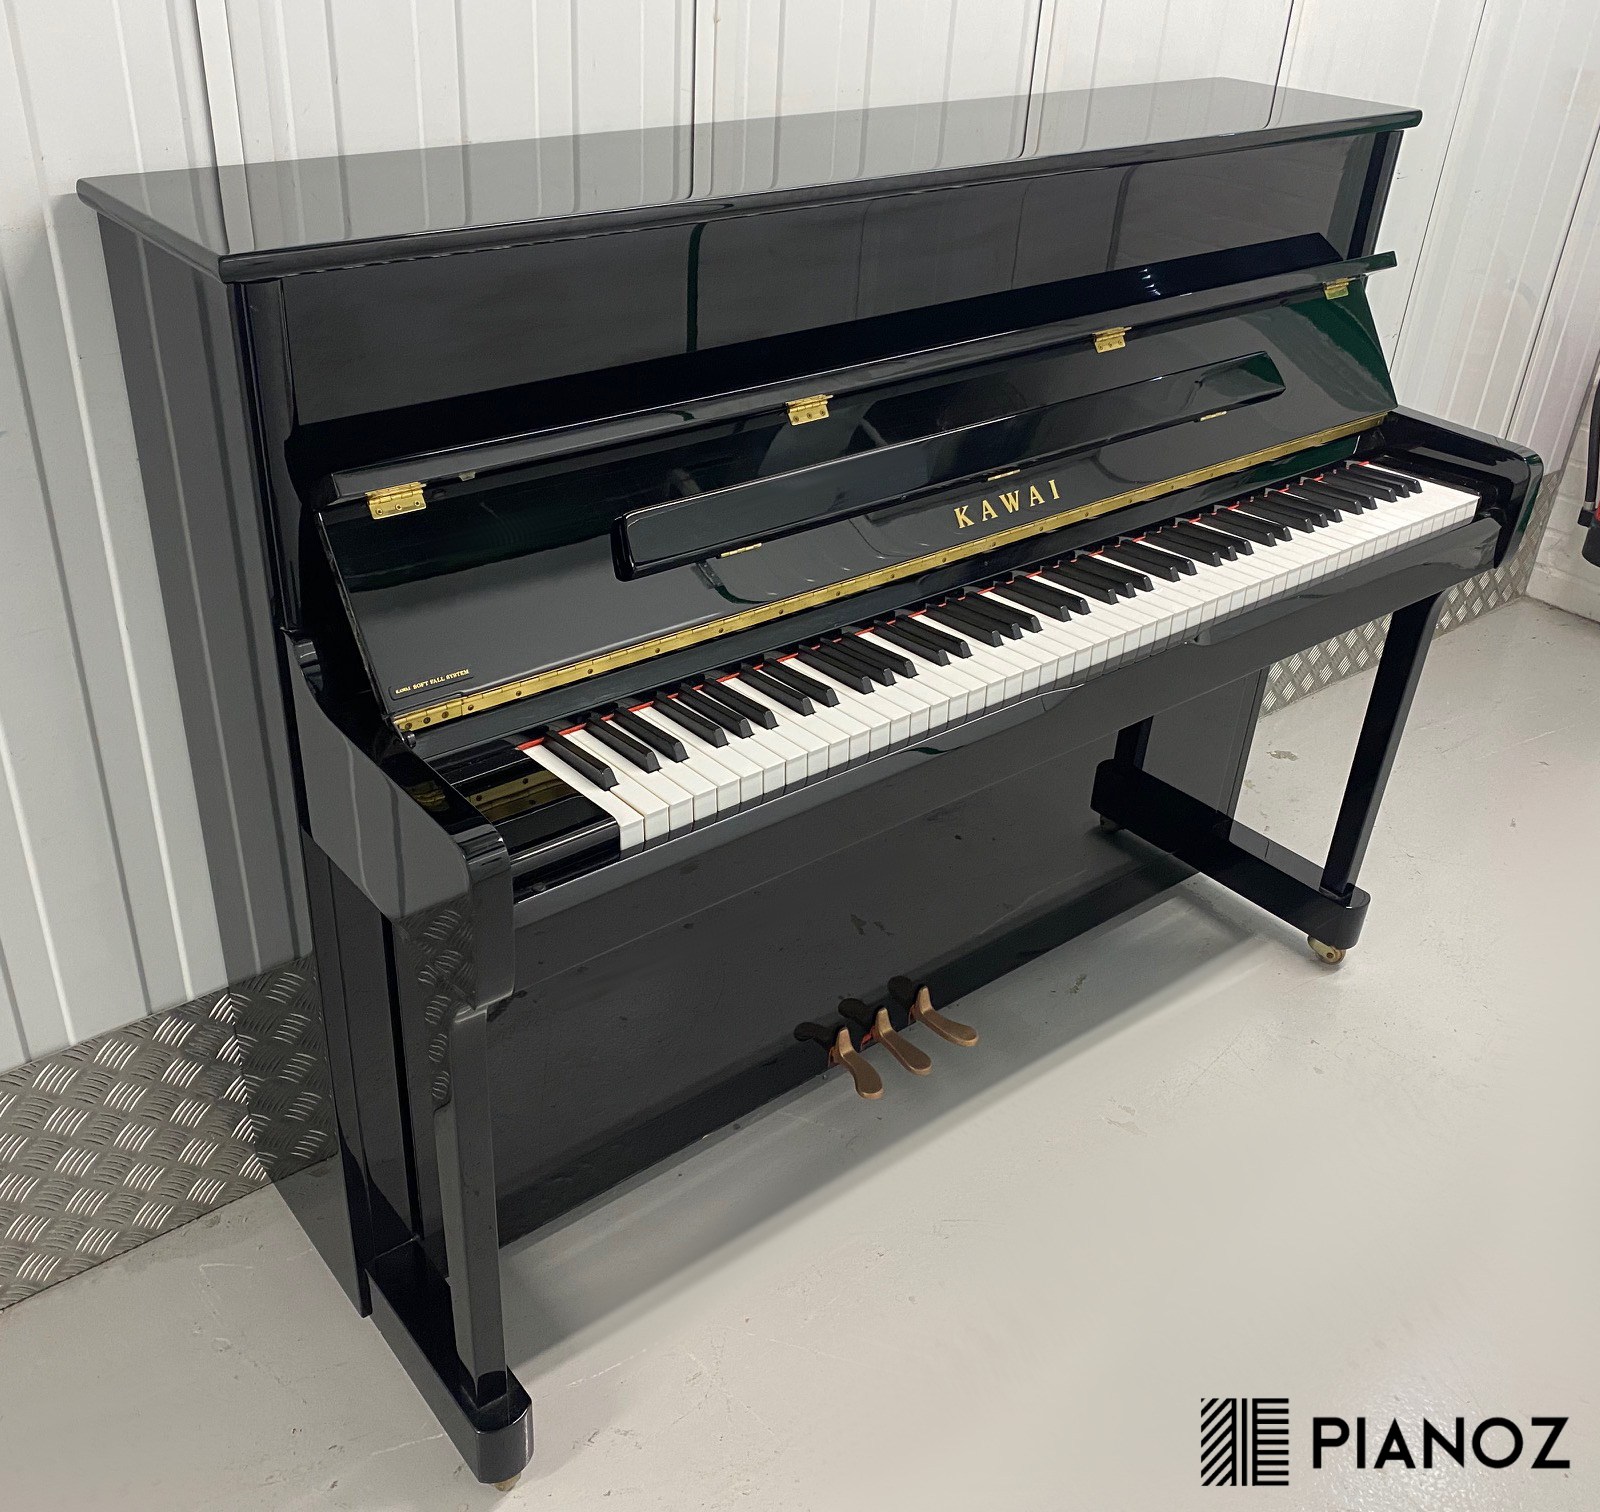 Kawai K2 K200 Upright Piano piano for sale in UK